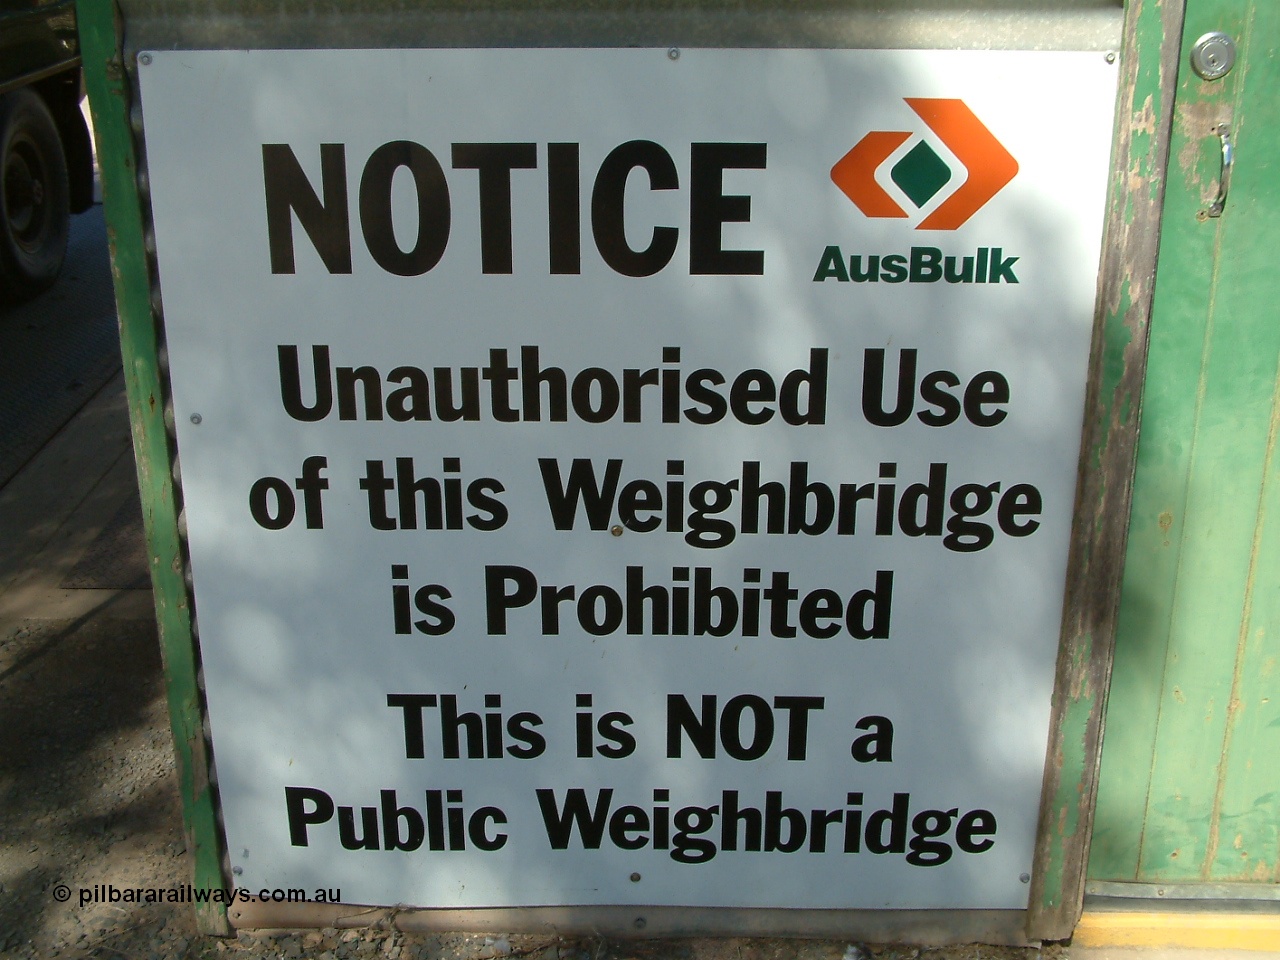 030403 132402
Eudunda, sign on the road weighbridge for the grain silos.
